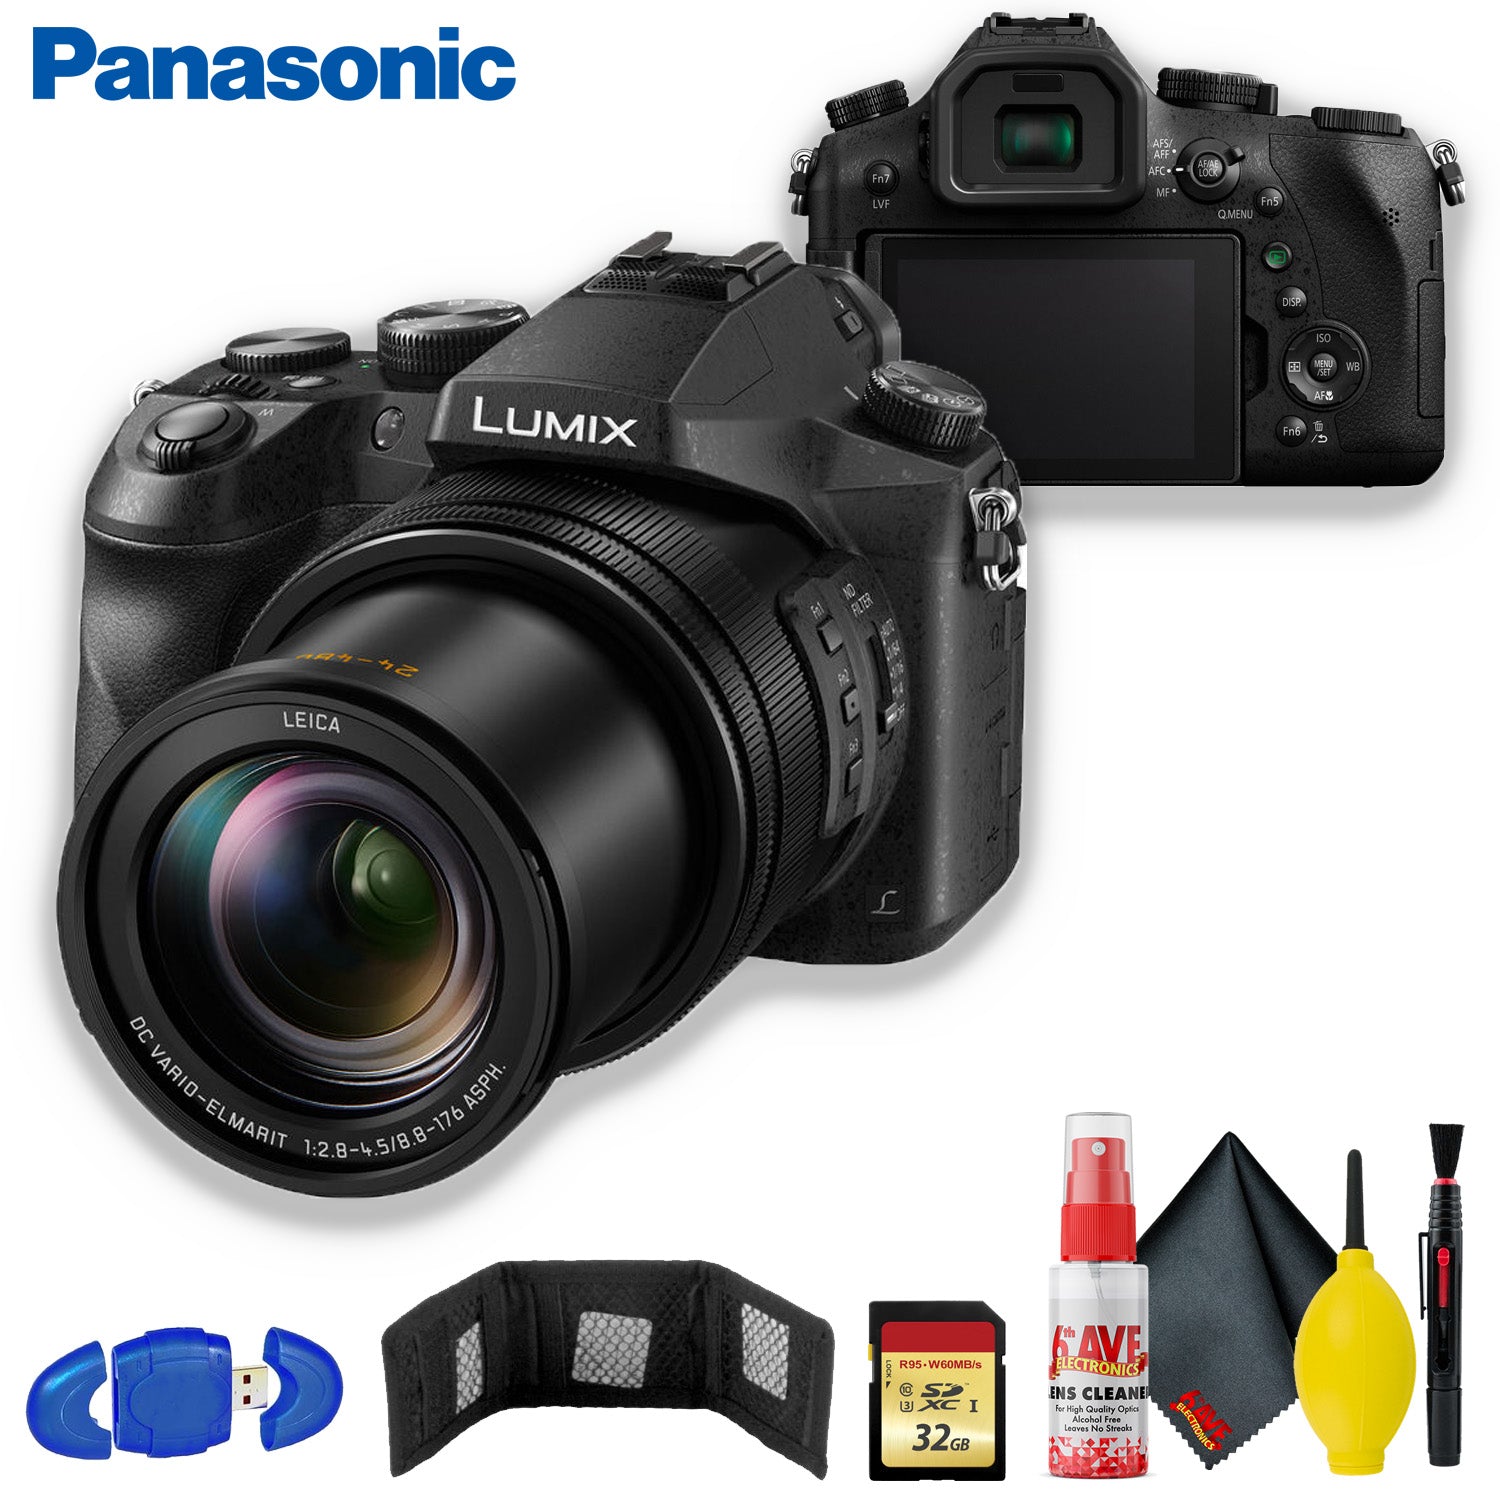 Panasonic Lumix DMC-FZ2500 Digital Camera with Memory Kit Starter Bundle